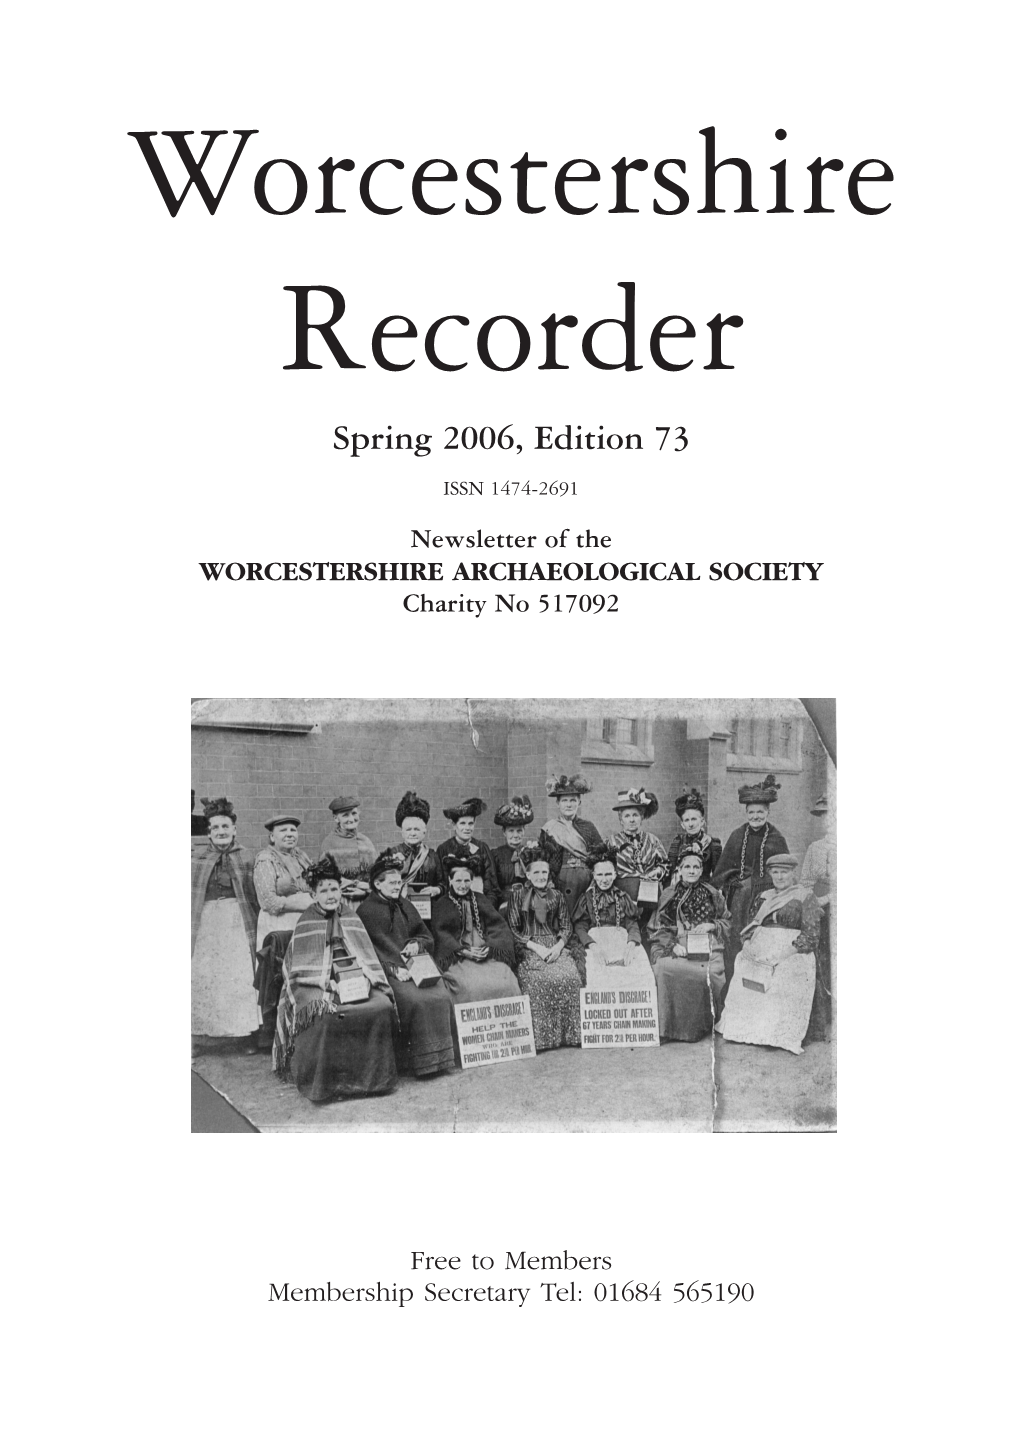 Worcs Recorder Issue 73